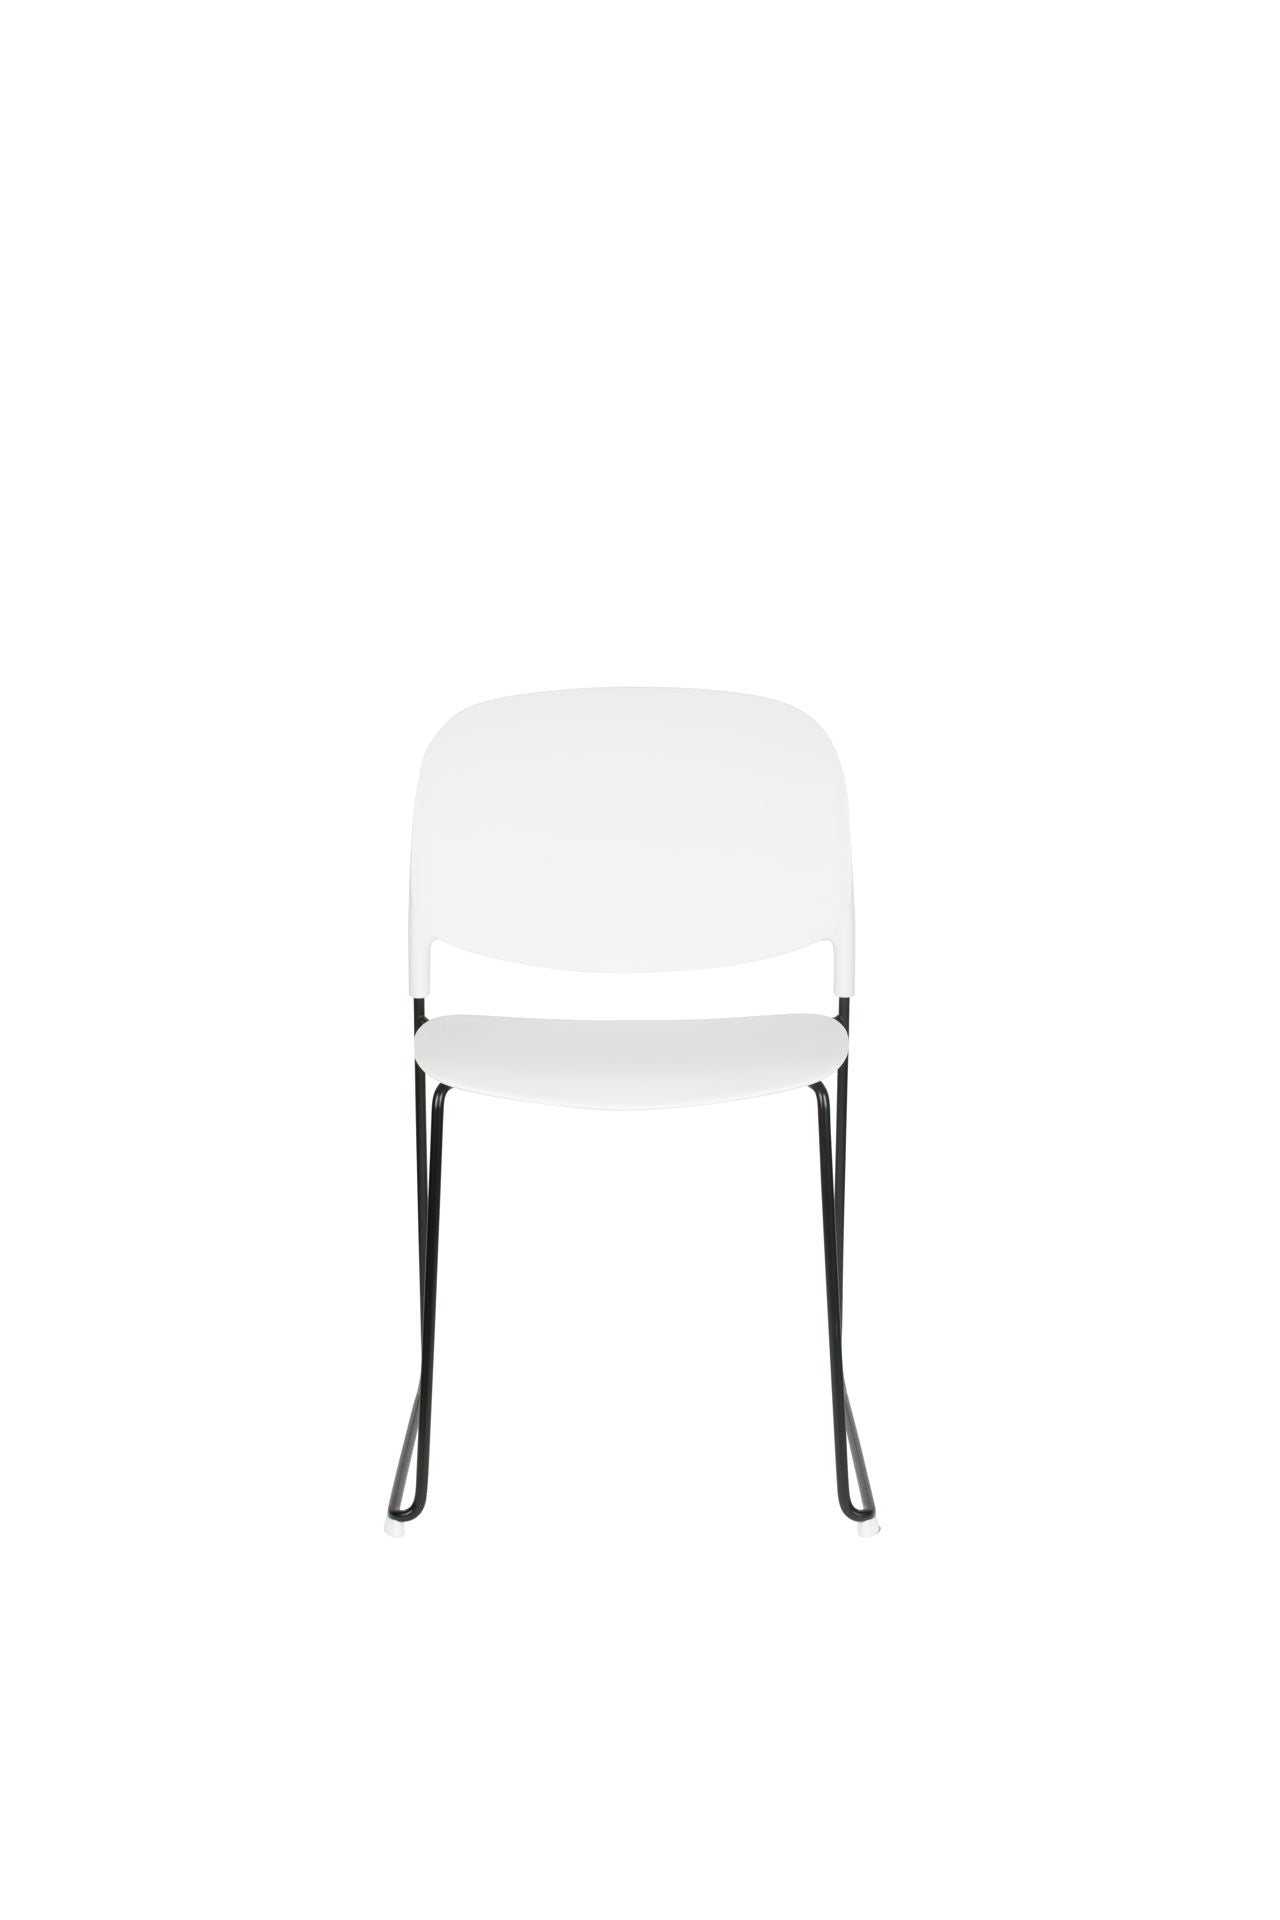 Nancy's San Sebasti n Chair - Rétro - Blanc, Noir - Polypropylène, Acier, Plastique - 52,5 cm x 48,5 cm x 80 cm